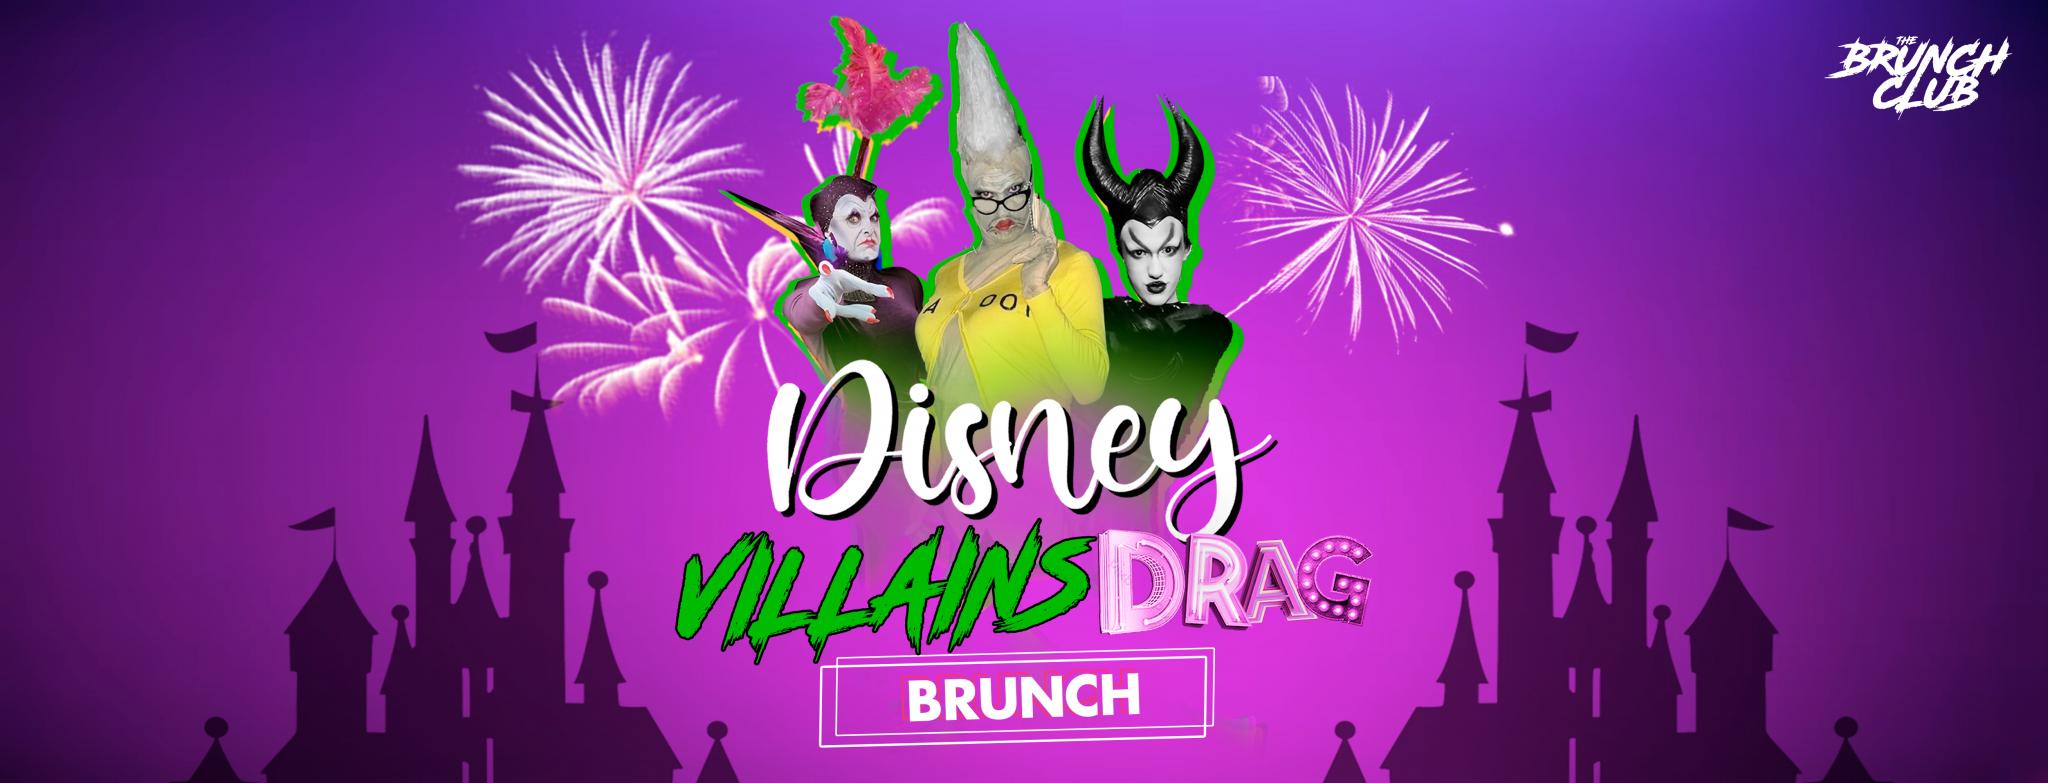 Disney Villains Drag Bottomless Brunch - Newcastle